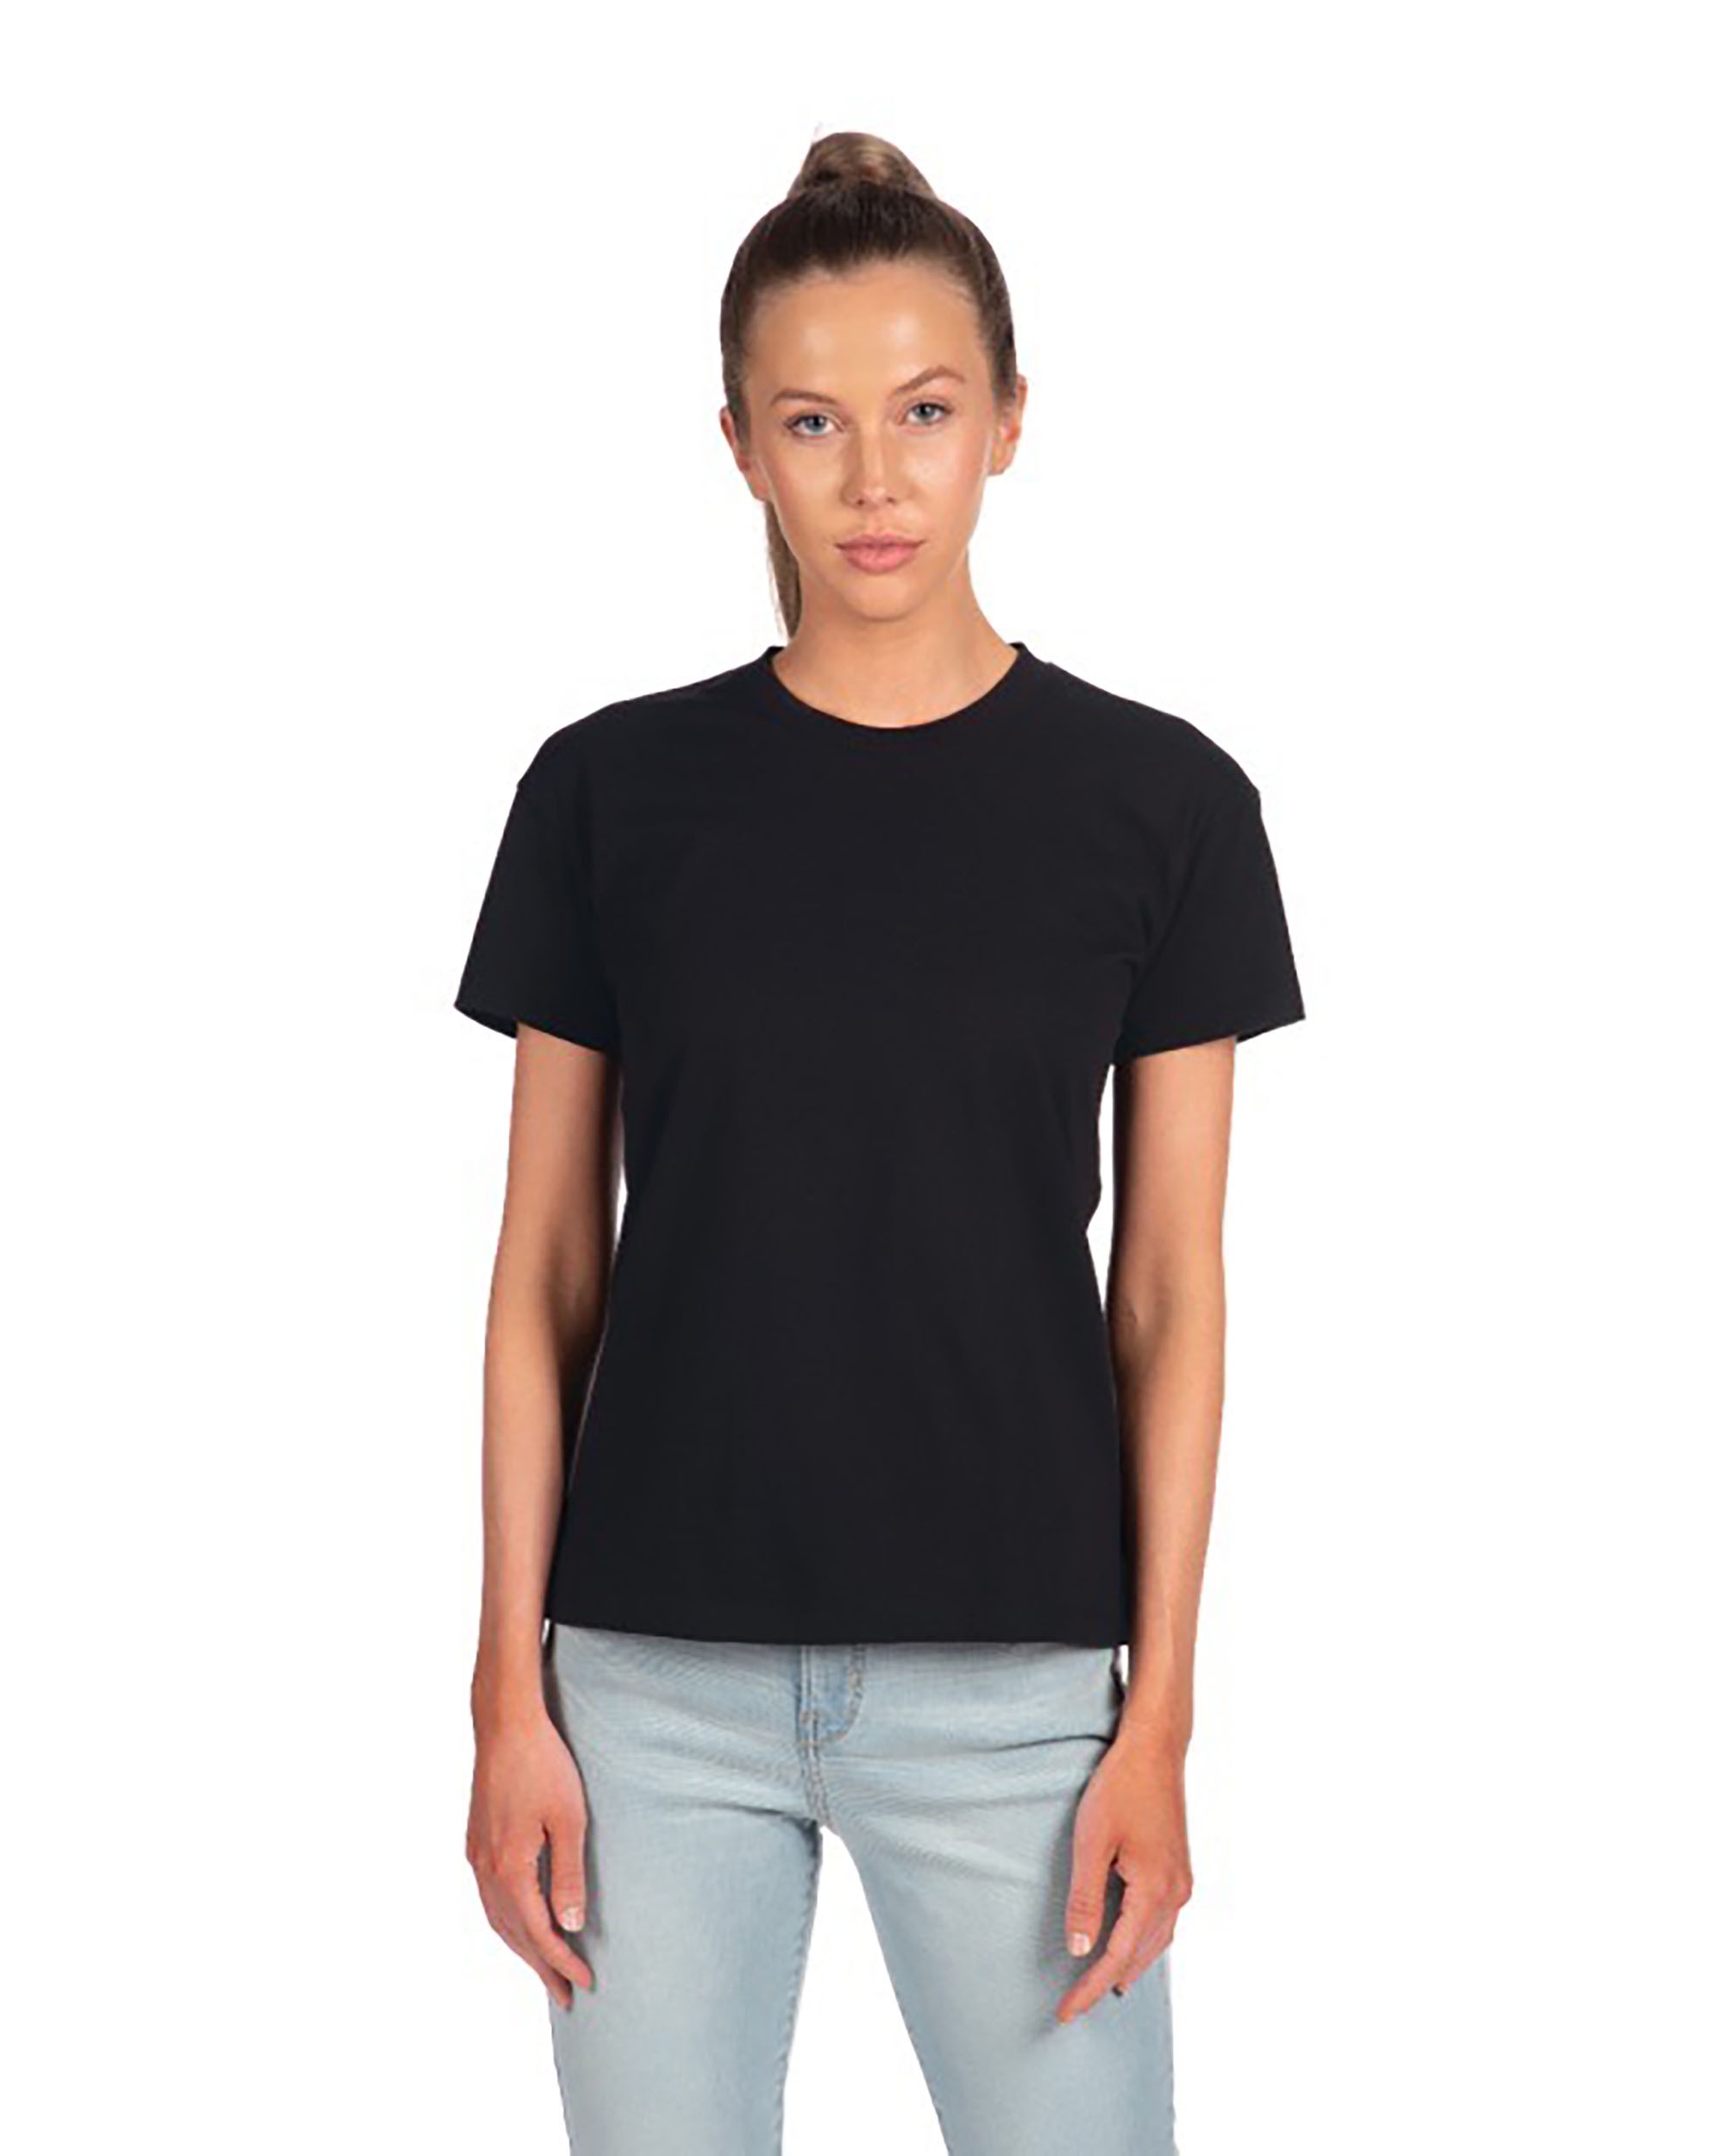 Next Level Apparel® 3910 Women's Cotton Relaxed T-Shirt